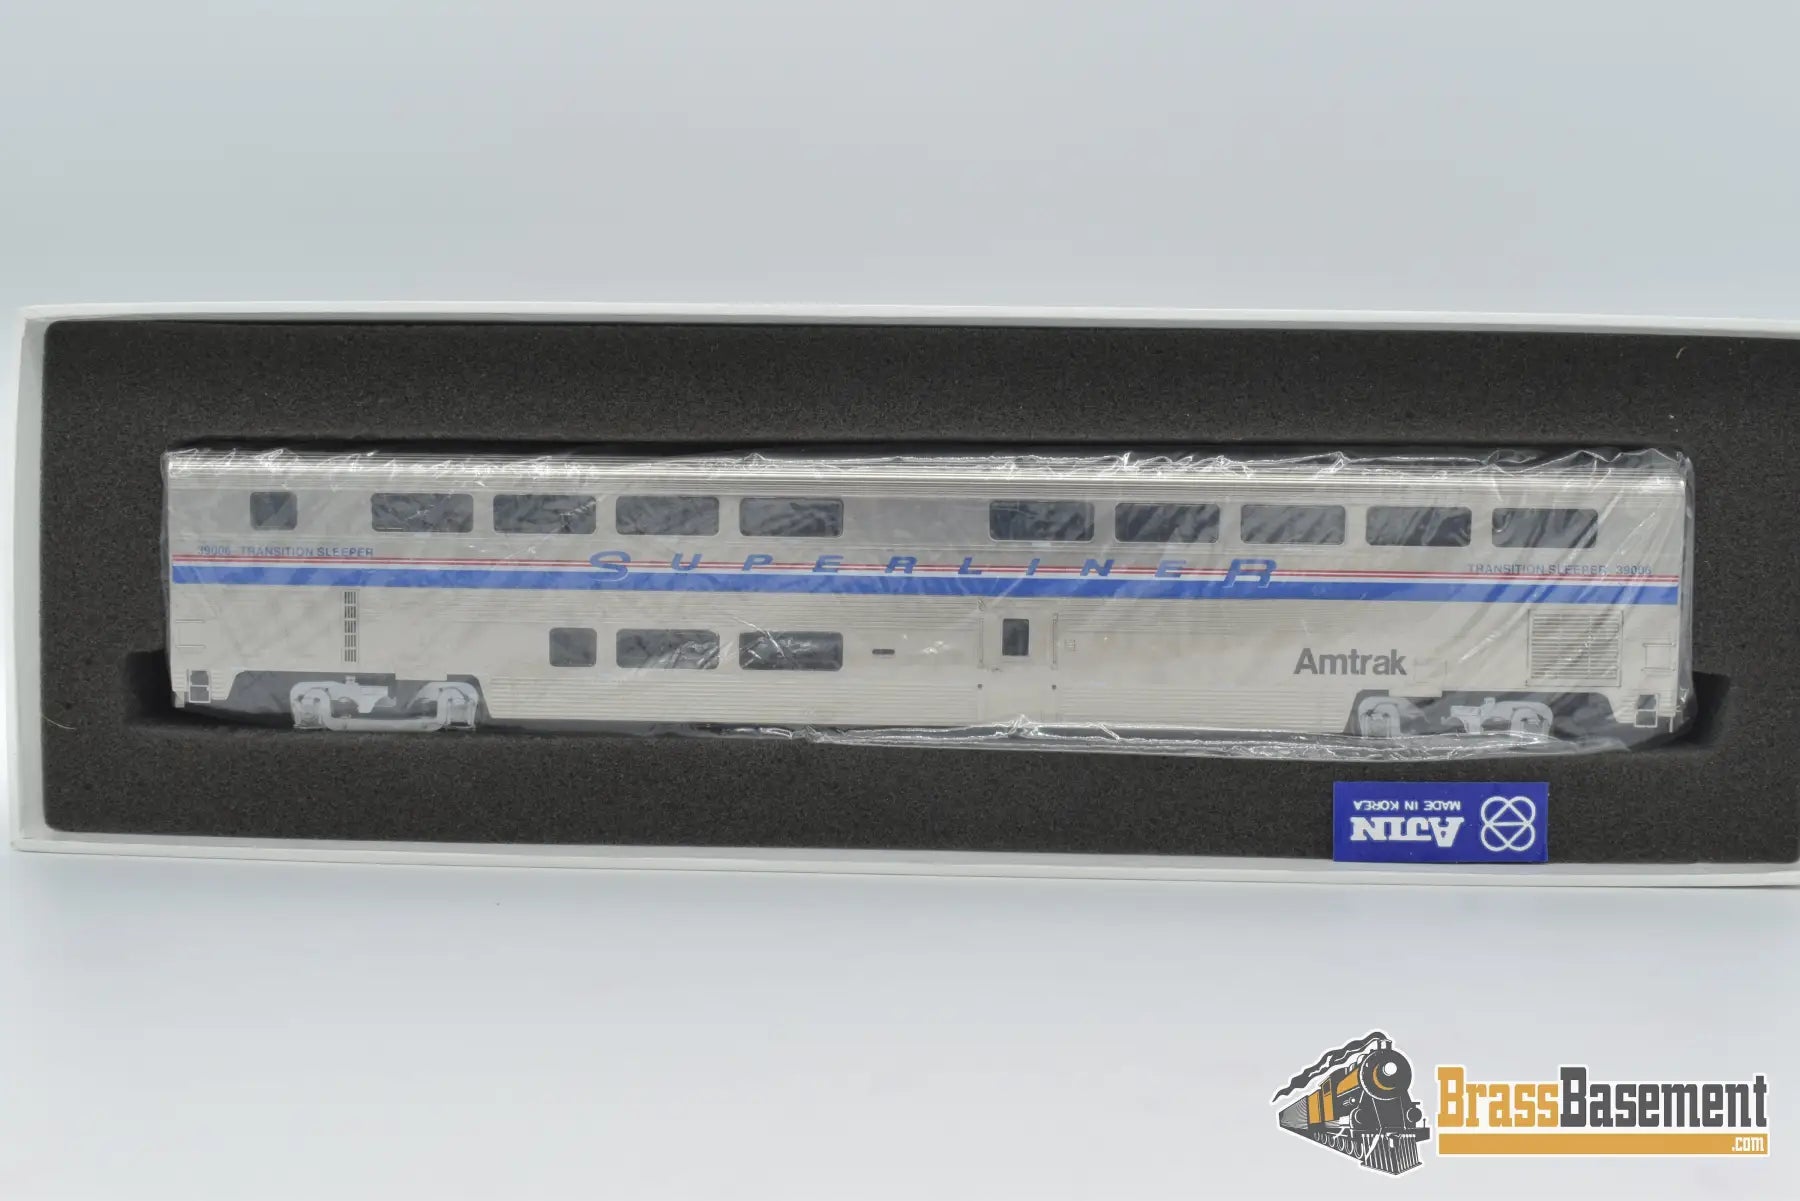 Ho Brass - Omi 3335.1 Amtrak Superliner Ii Transition Sleeper #39006 Factory Paint Passenger